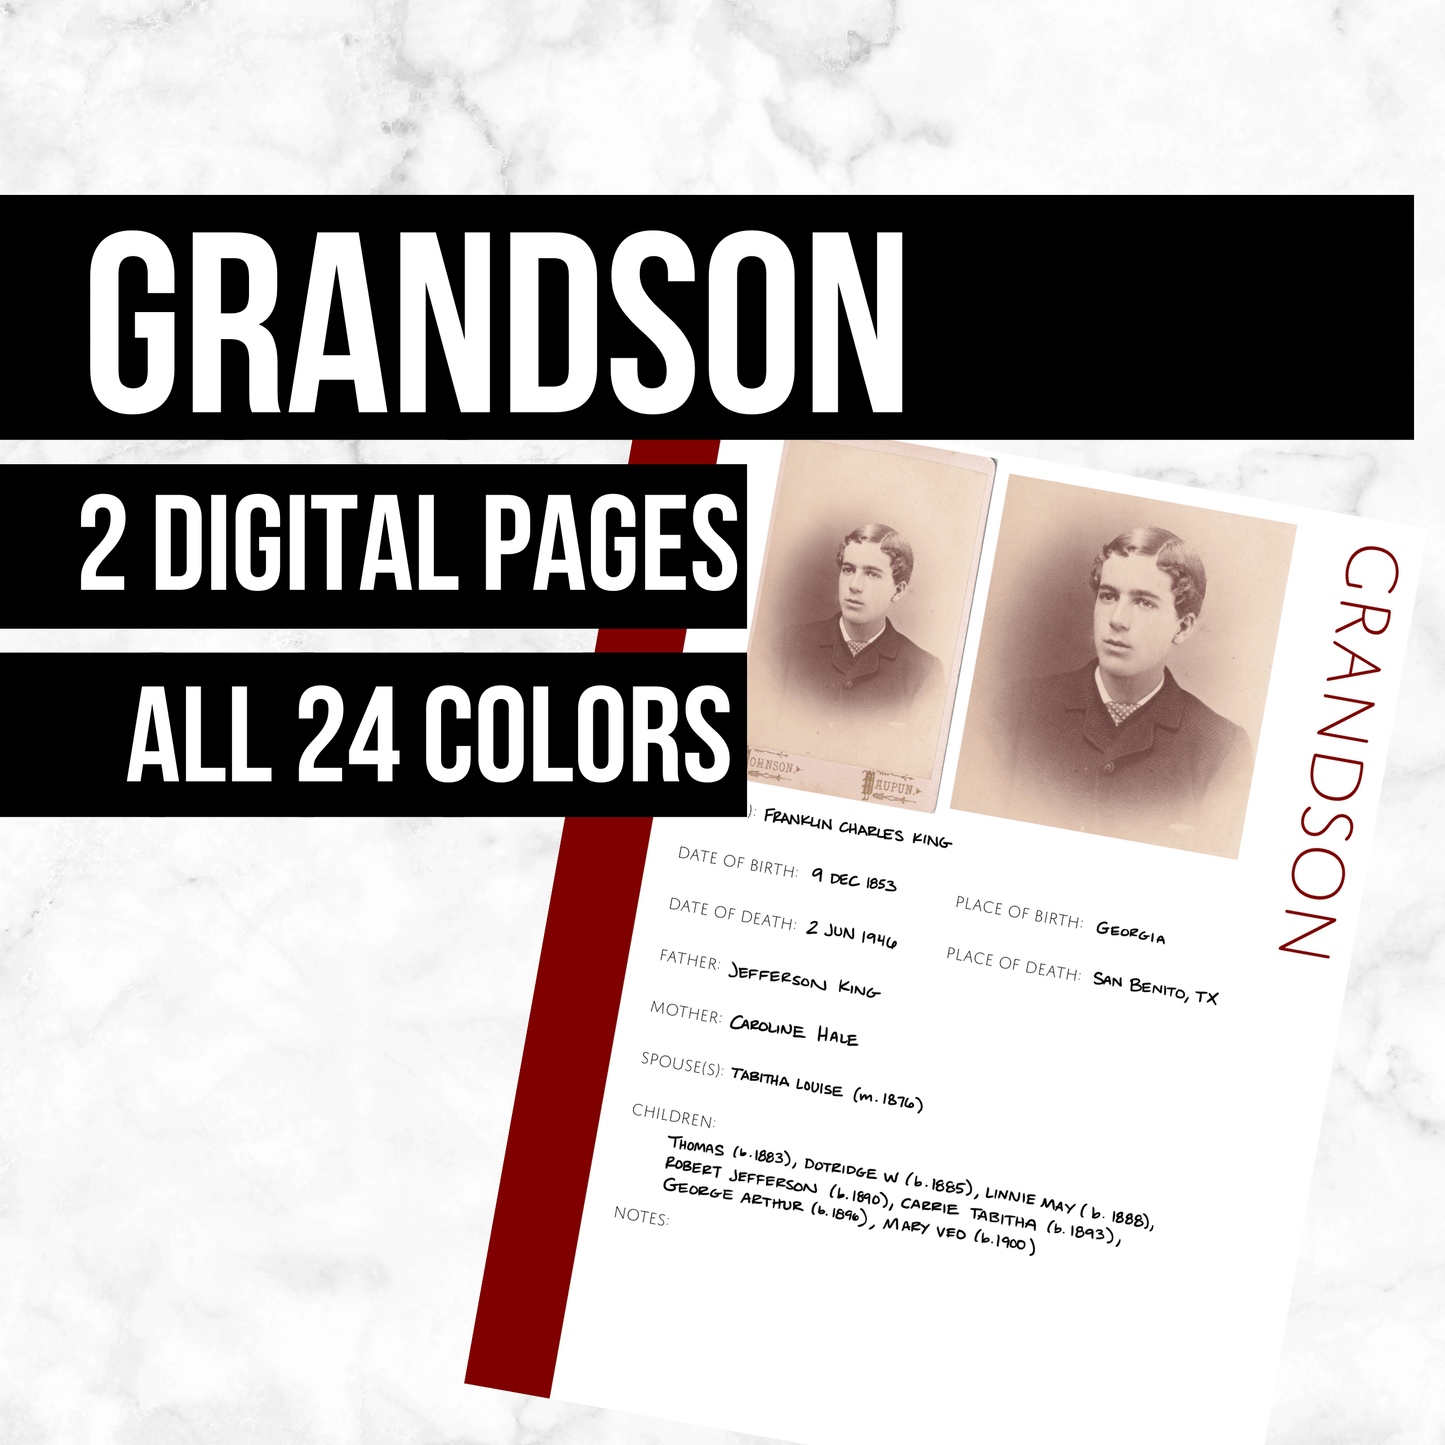 Grandson Profile: Printable Genealogy Page (Digital Download)